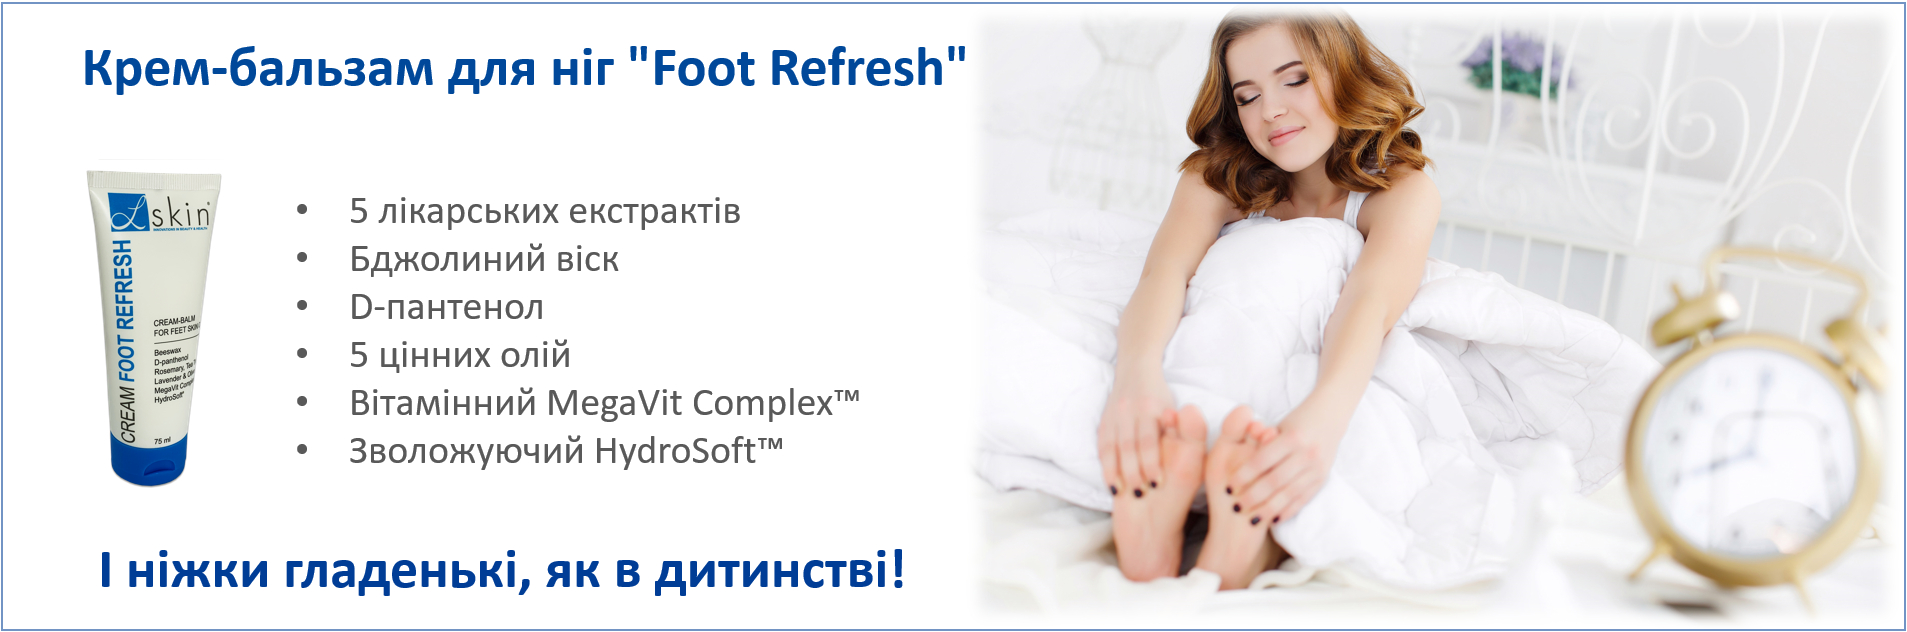 Foot refresh